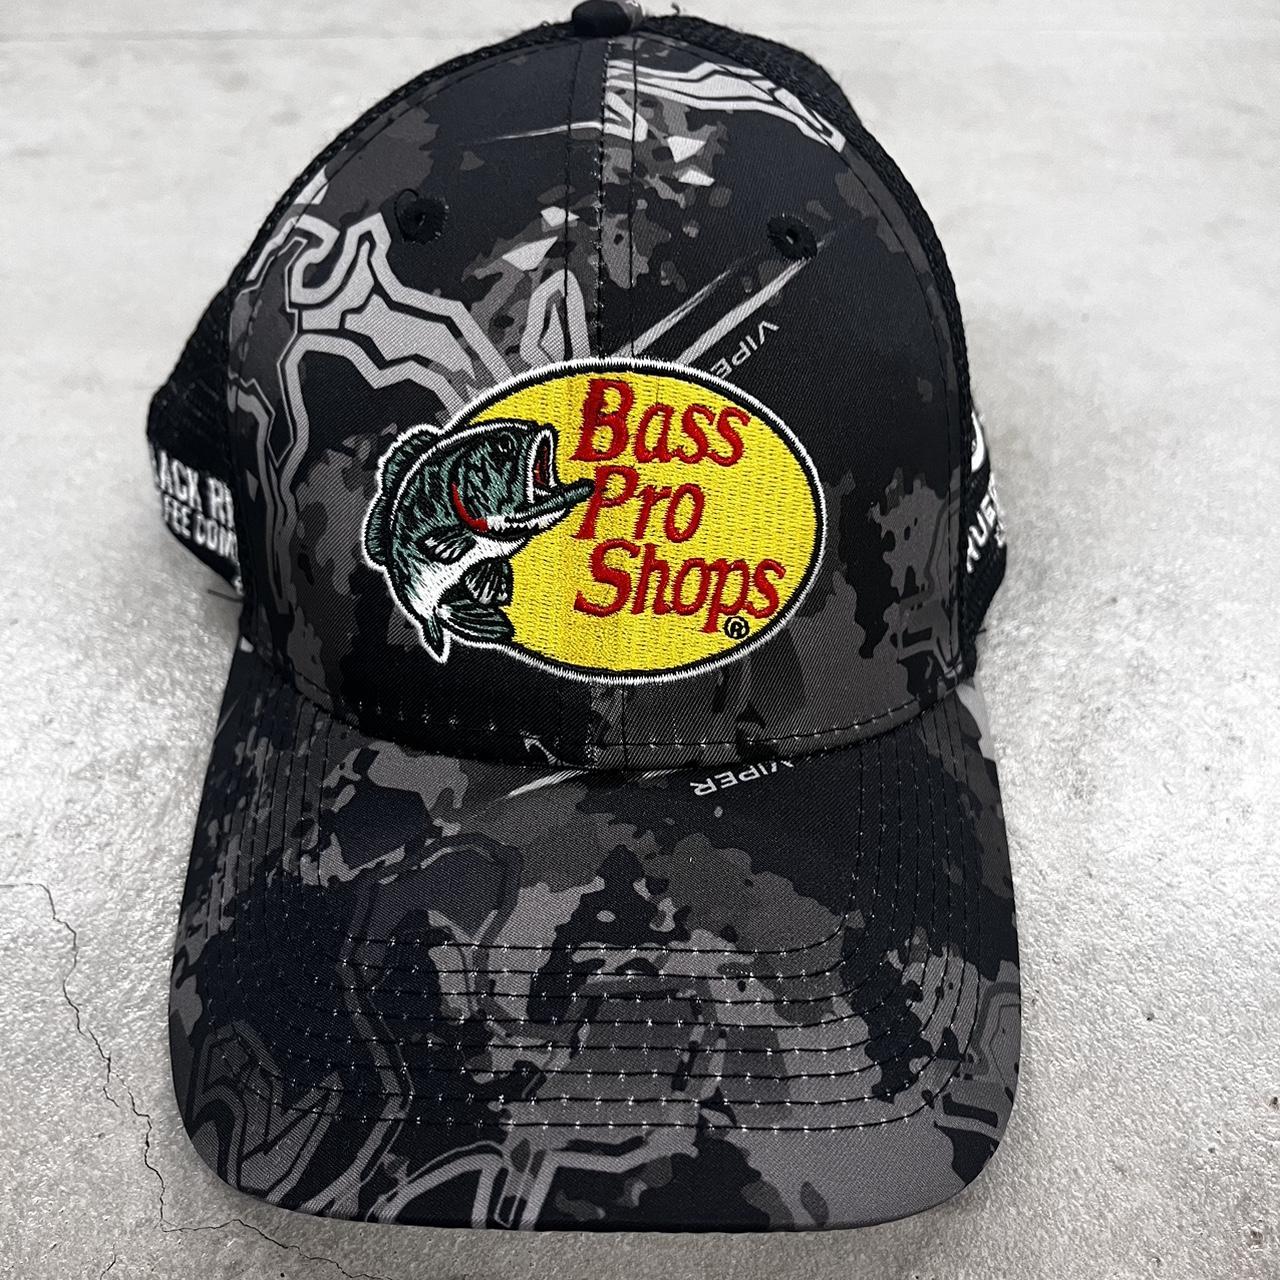 Bass pro shops Snap back hat + Fits most sizes + - Depop